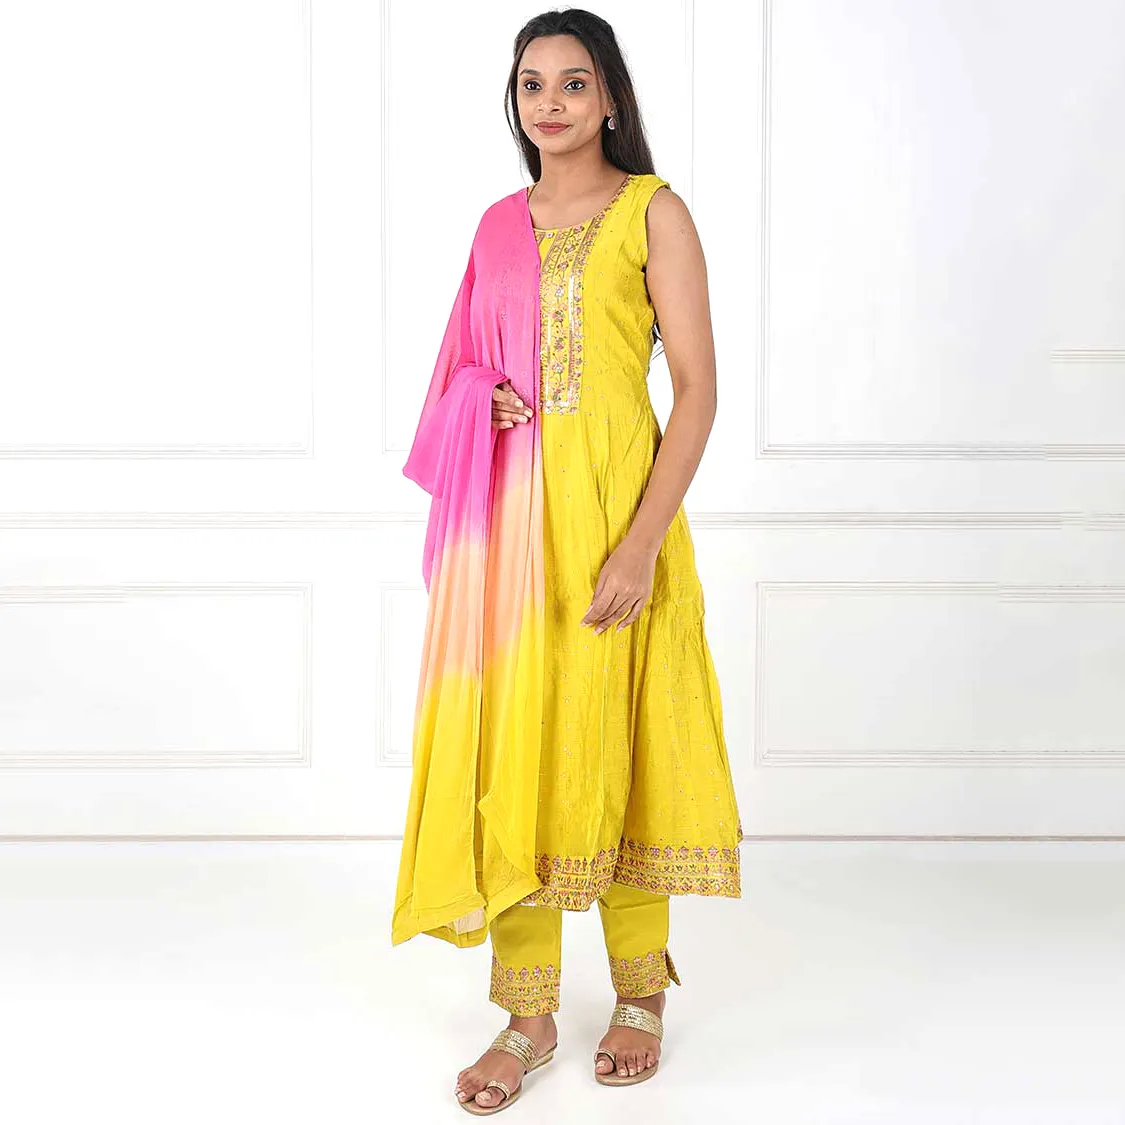 Wholesale latest Design Casual Wear OEM ODM Women Clothing Professional Printed Women 3 Piece Shalwar Kameez With Dupatta